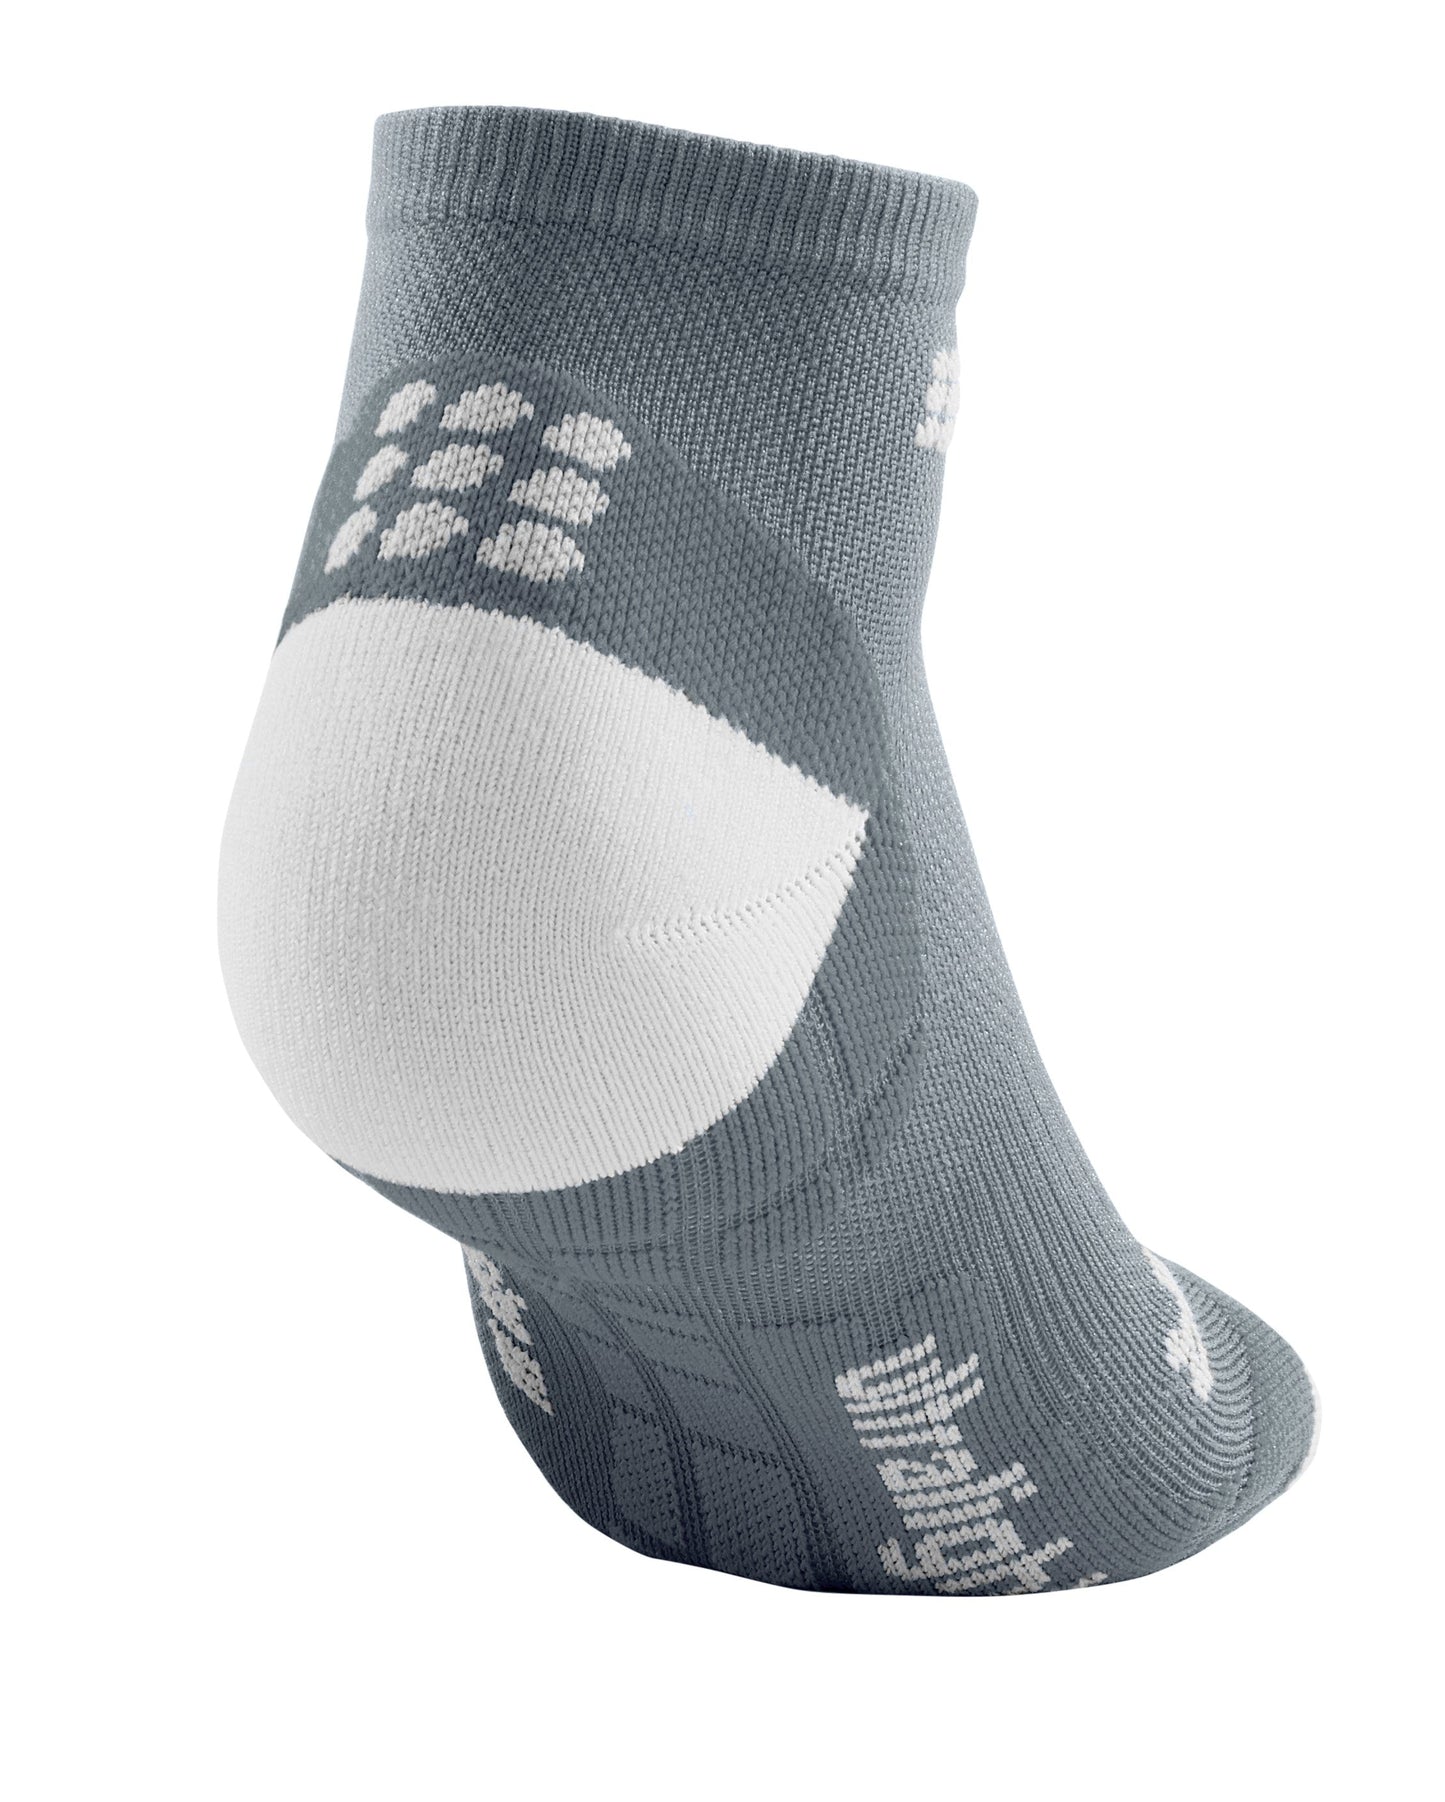 CEP Ultralight  Low Cut Compression Sock Men's -Gray /Light Gray